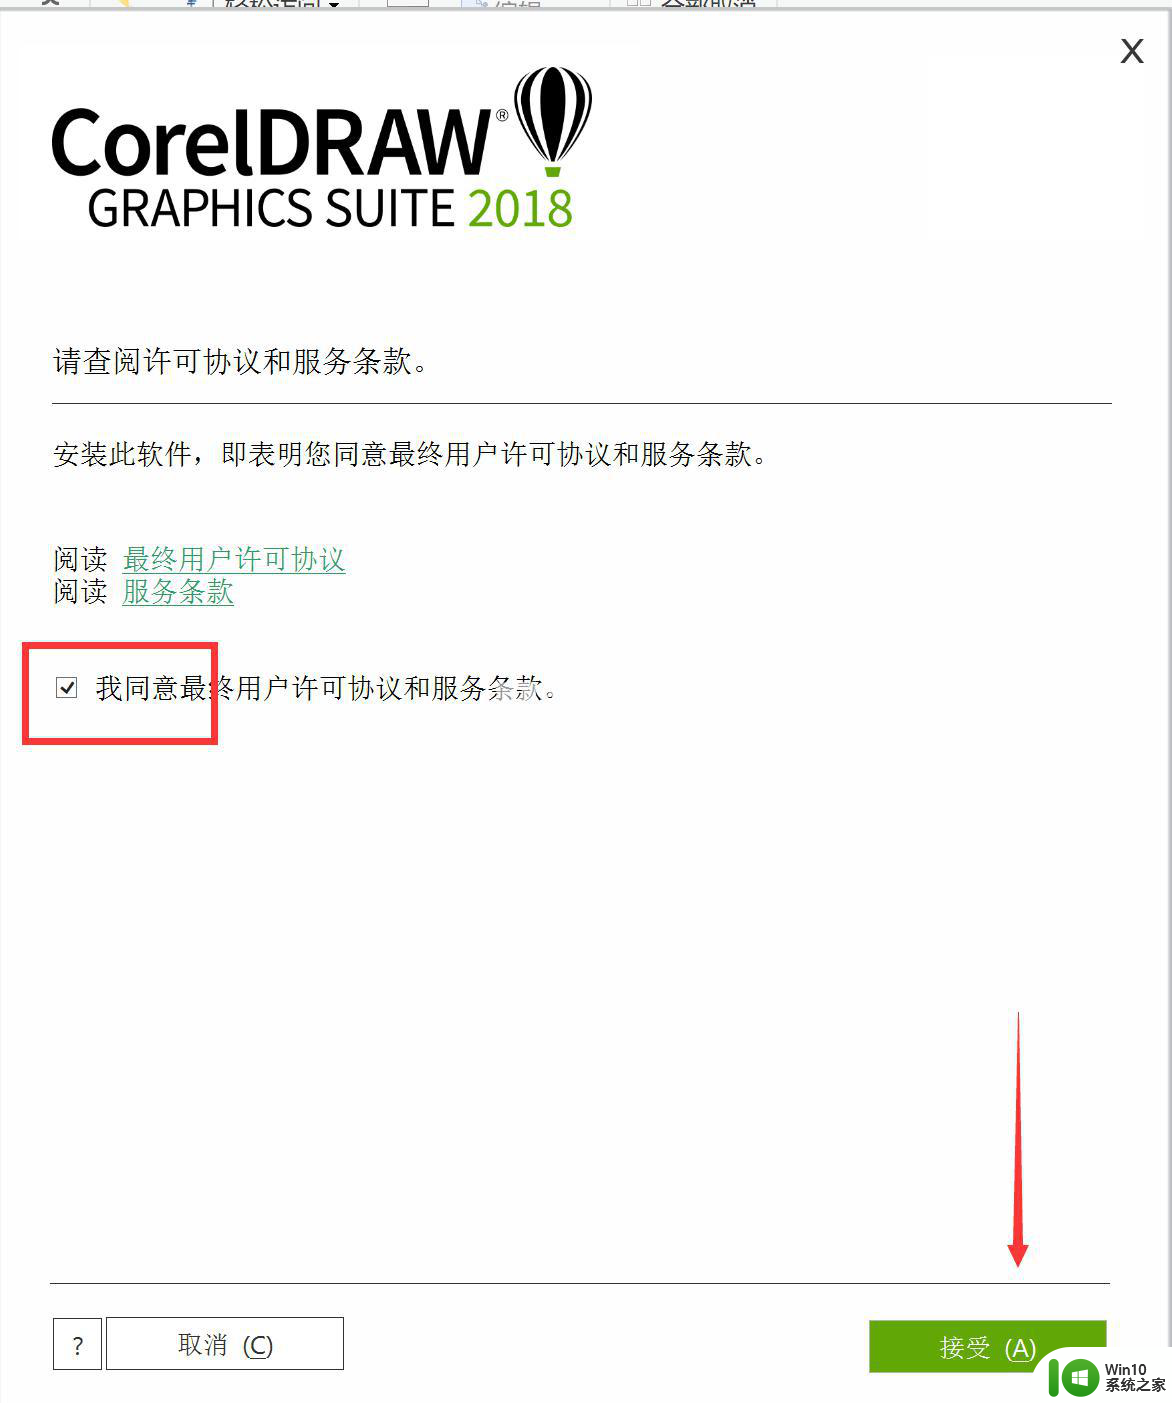 cdr2018破解版安装教程 CorelDRAW 2018破解激活方法详解